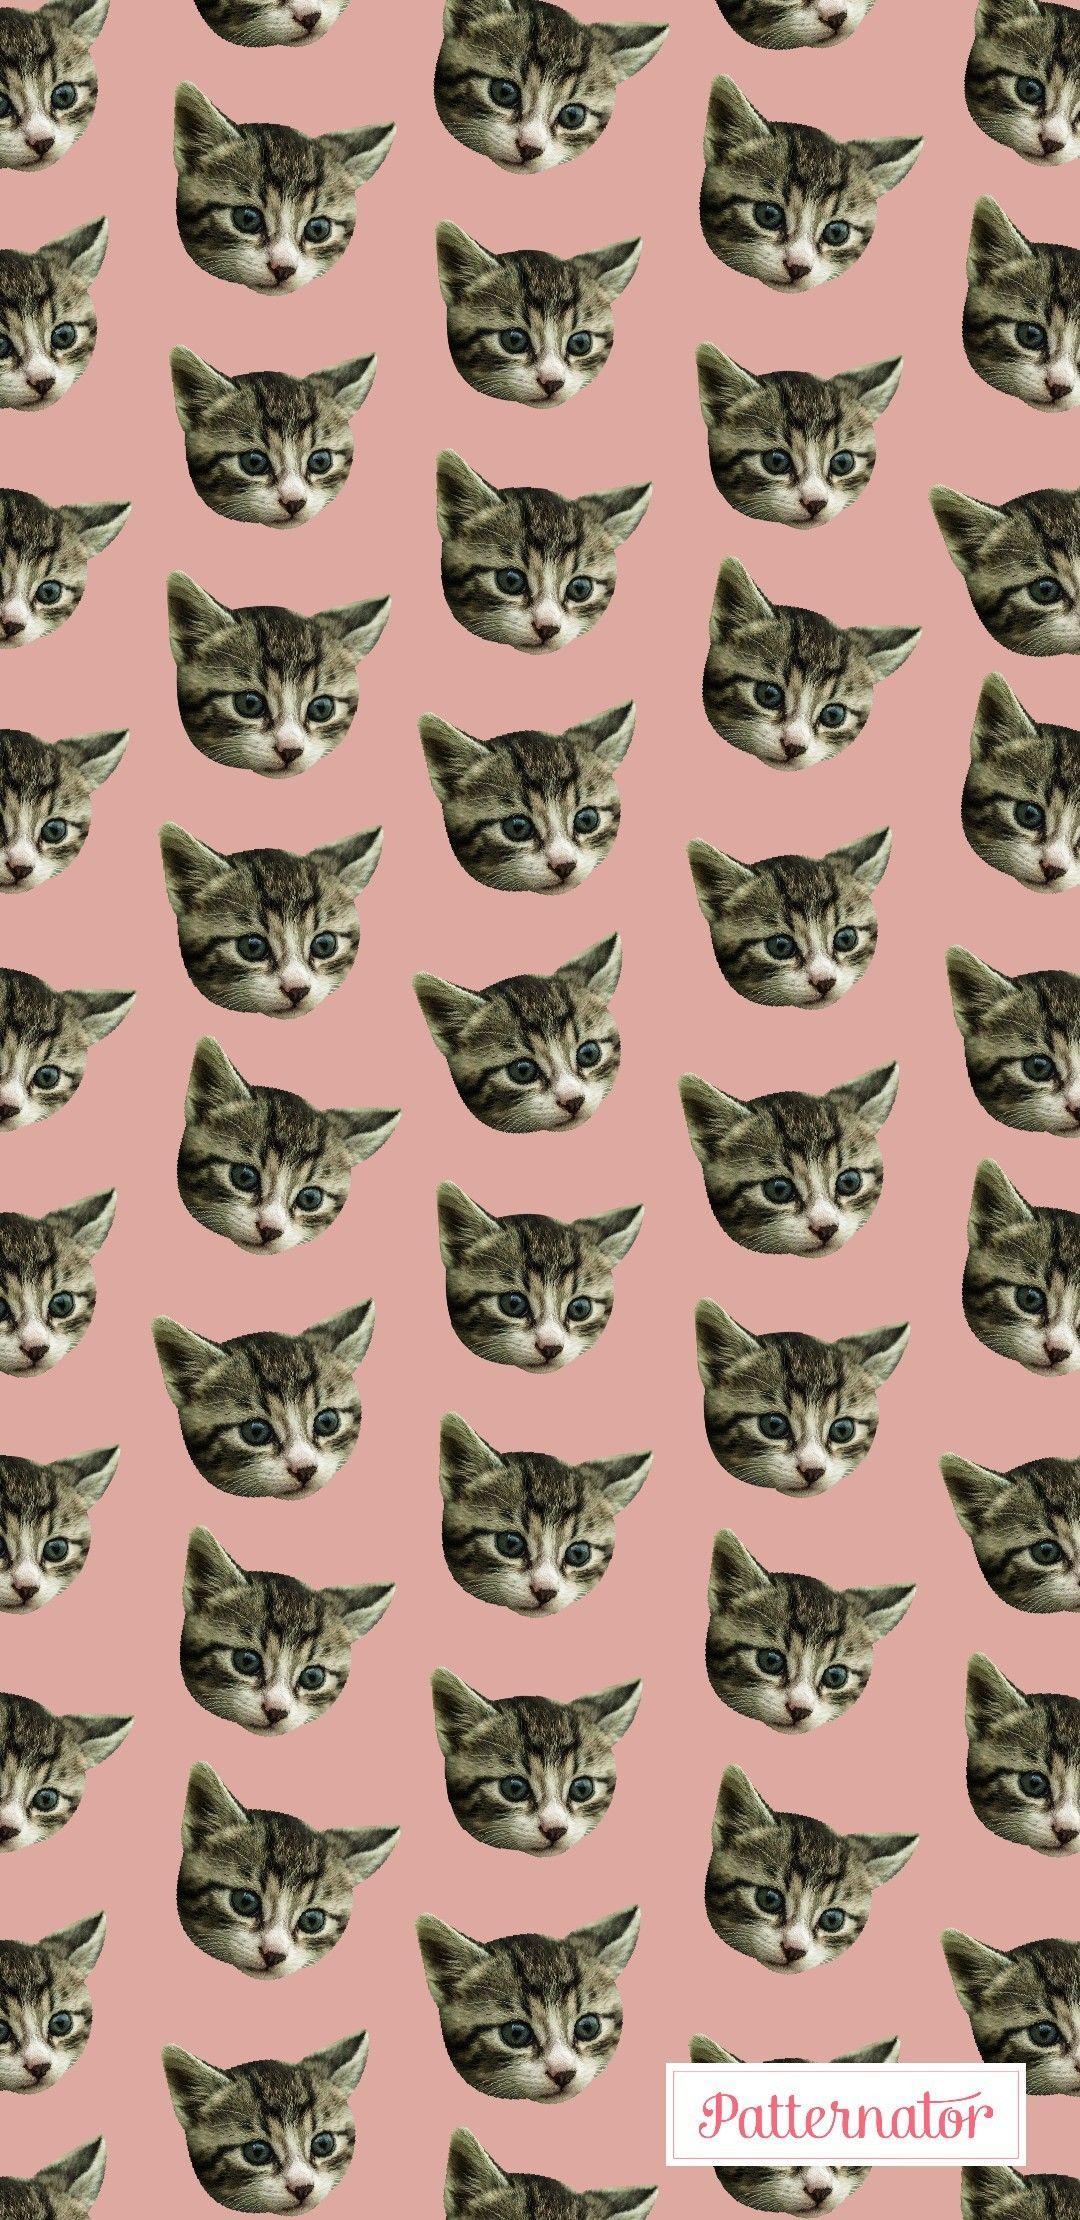 Cat Face Wallpaper, Free Stock Wallpaper